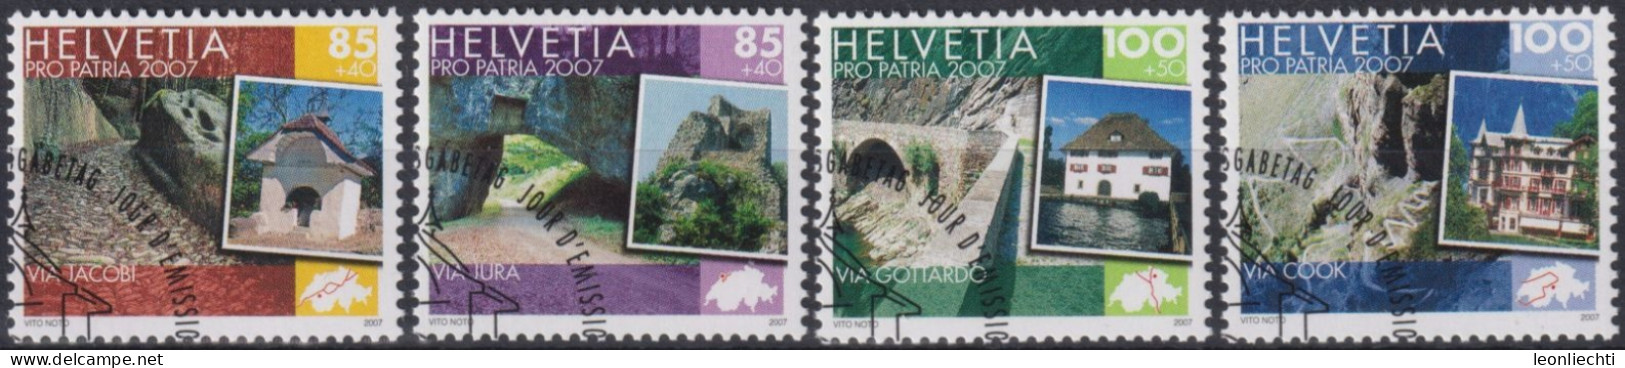 2007 Schweiz Pro Patria, Kulturwege Schweiz, ⵙ Zum:CH B296-299, Mi:CH 2007-2010, Yt:CH 1933-1936 - Used Stamps